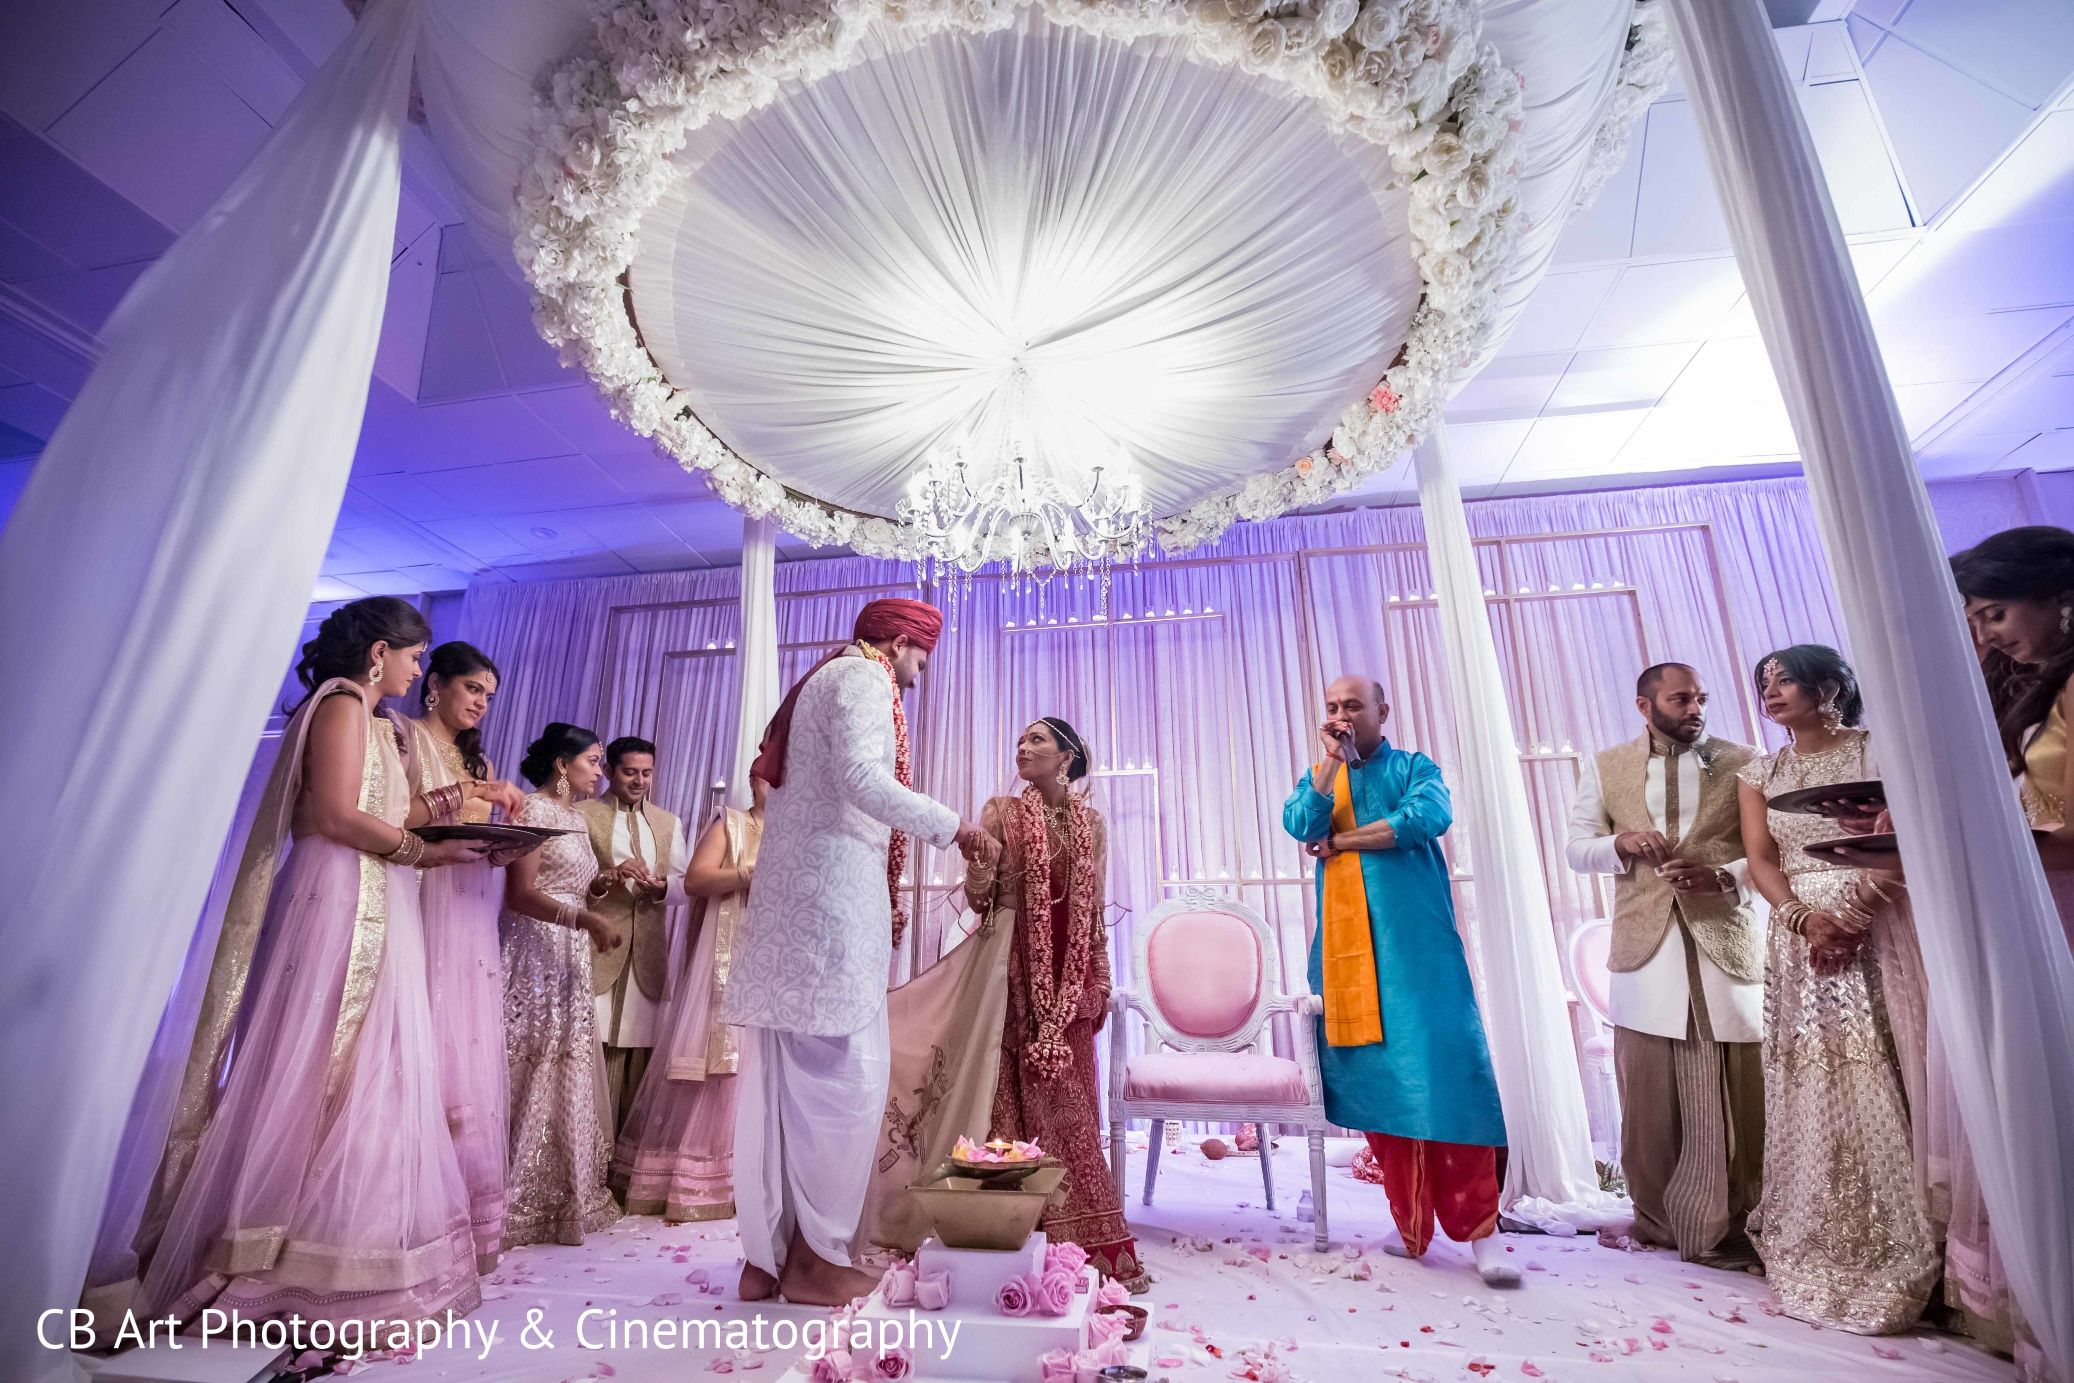 Indian wedding decor - Mandap/Stage